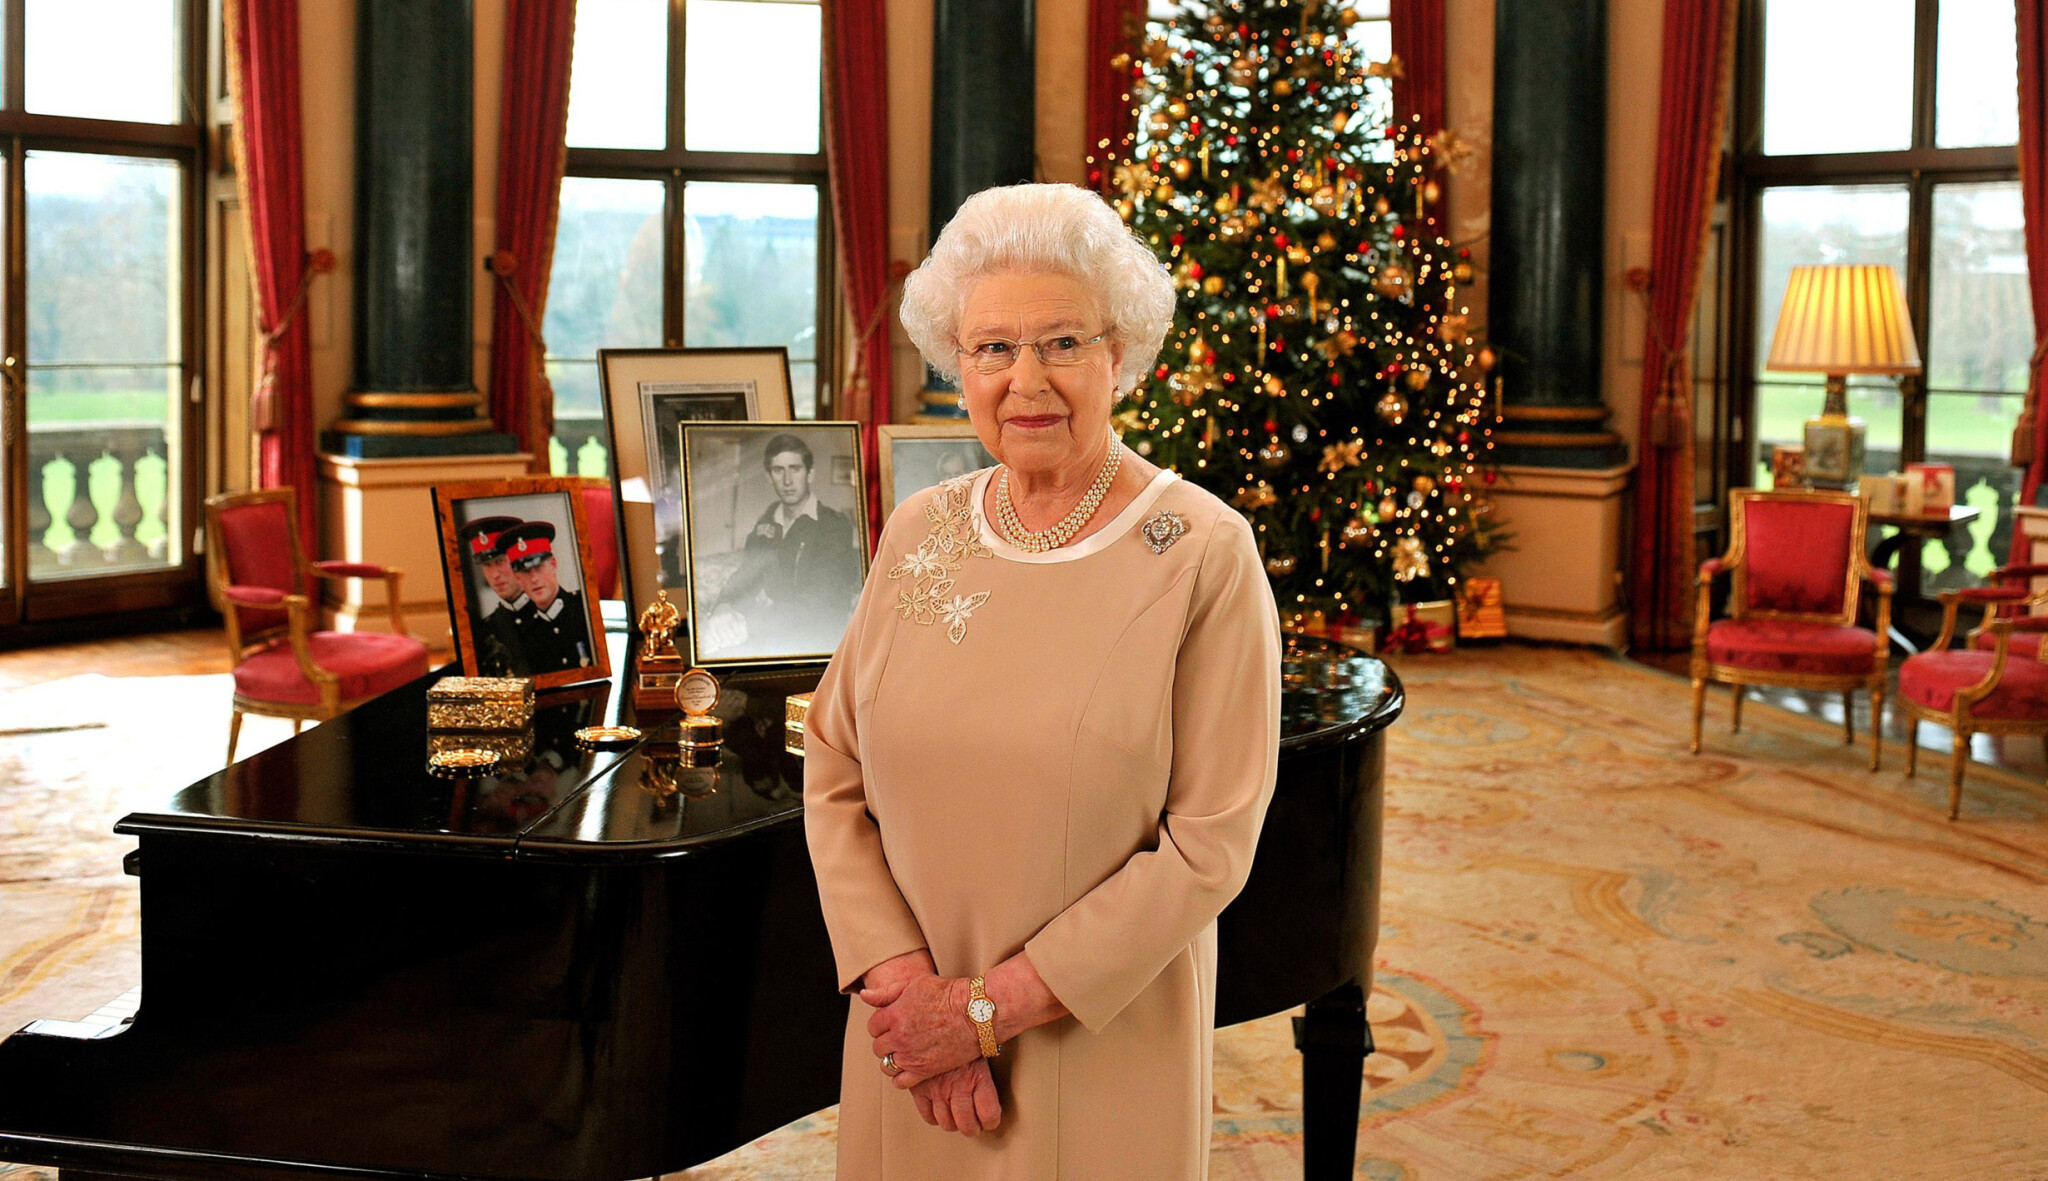 Forbes Royal: Chcete na adventní čaj s královnou? Diář má nabitý i v třiadevadesáti